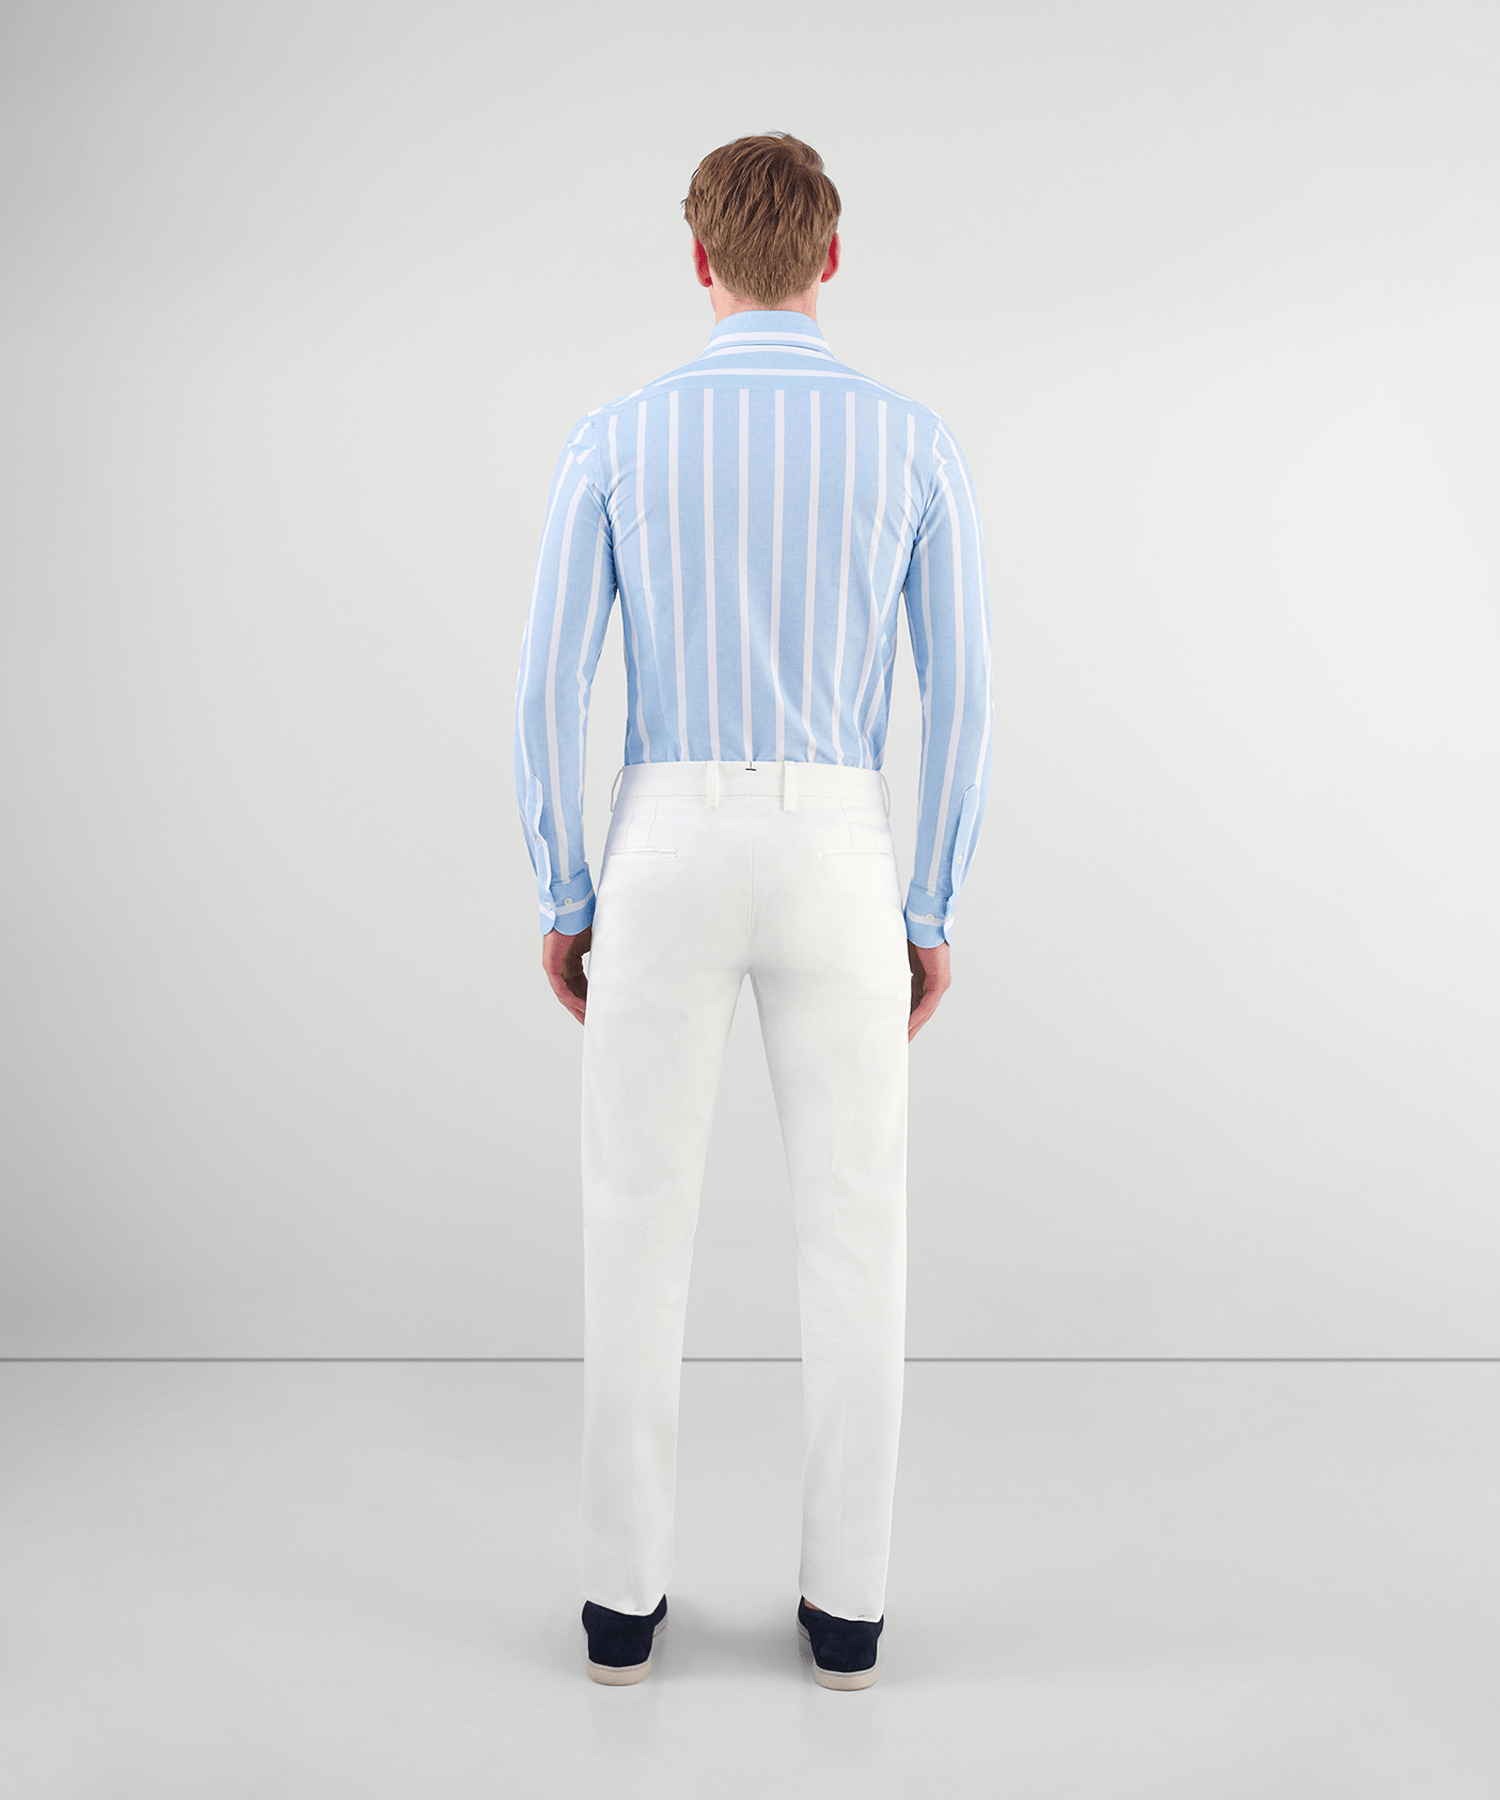 SOCI3TY Overhemd techfabric lichtblauw/wit gestreept - The Society Shop